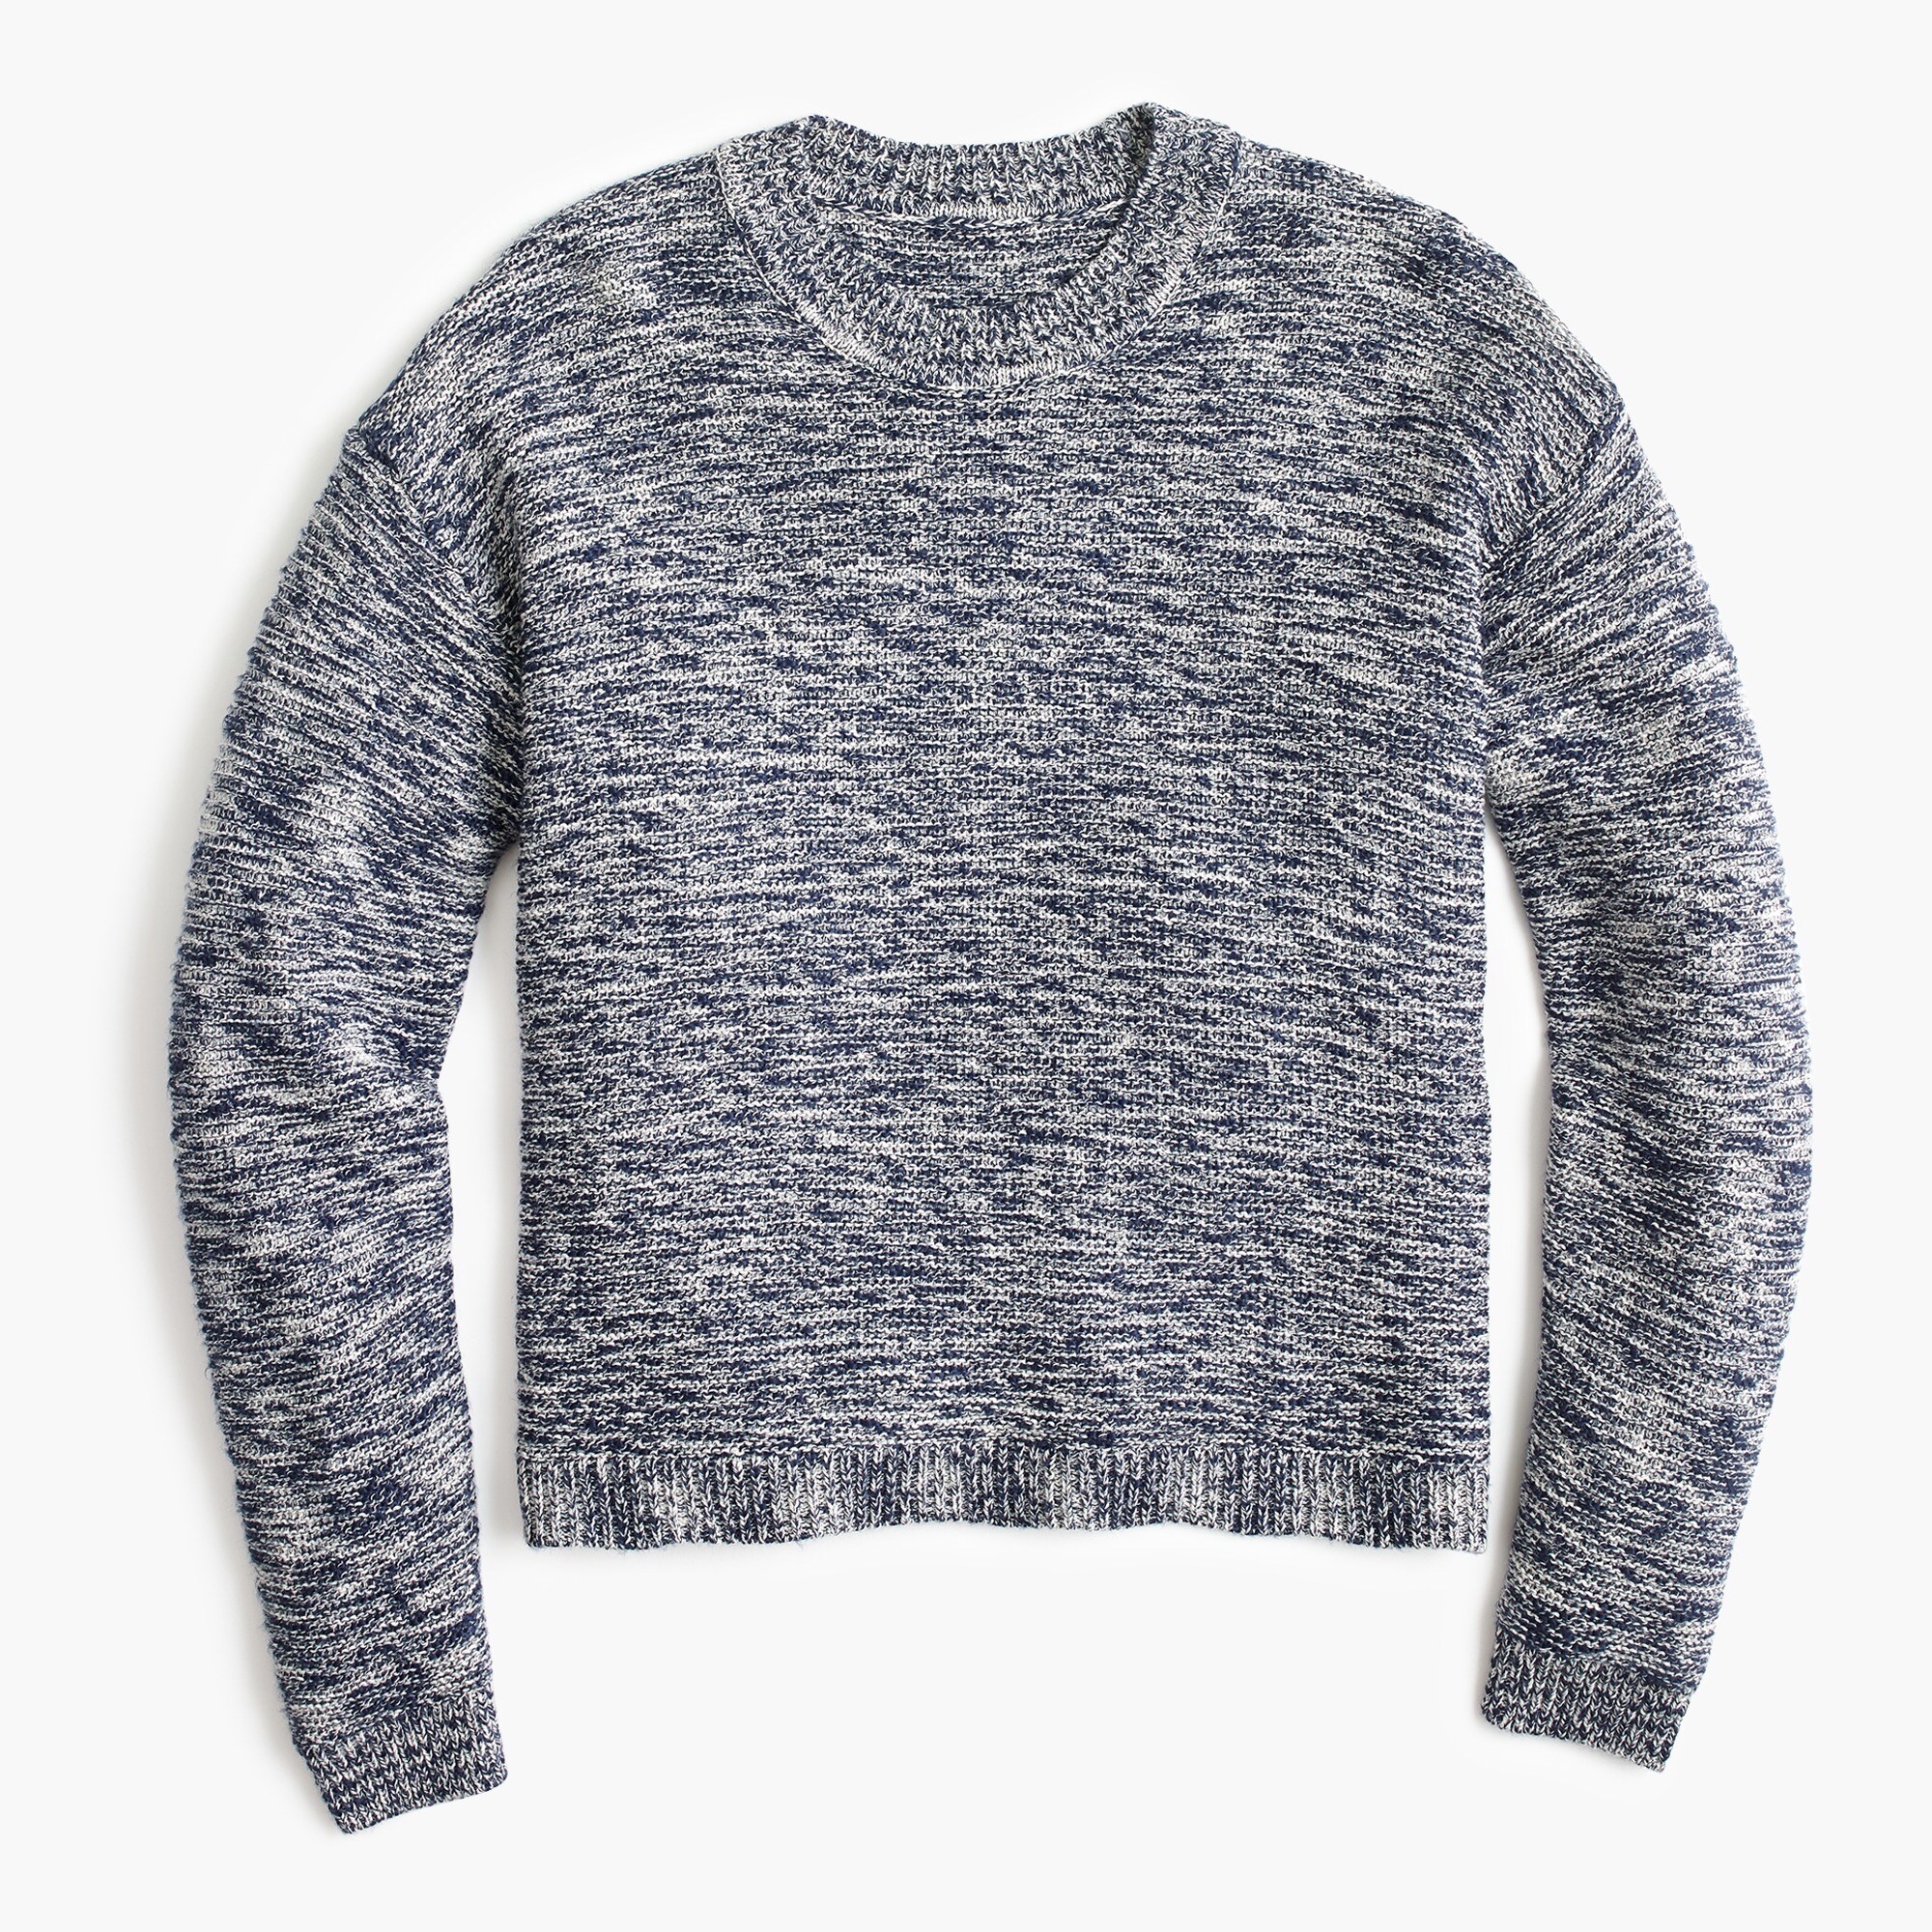 Marled crewneck sweater : Women sweaters | J.Crew